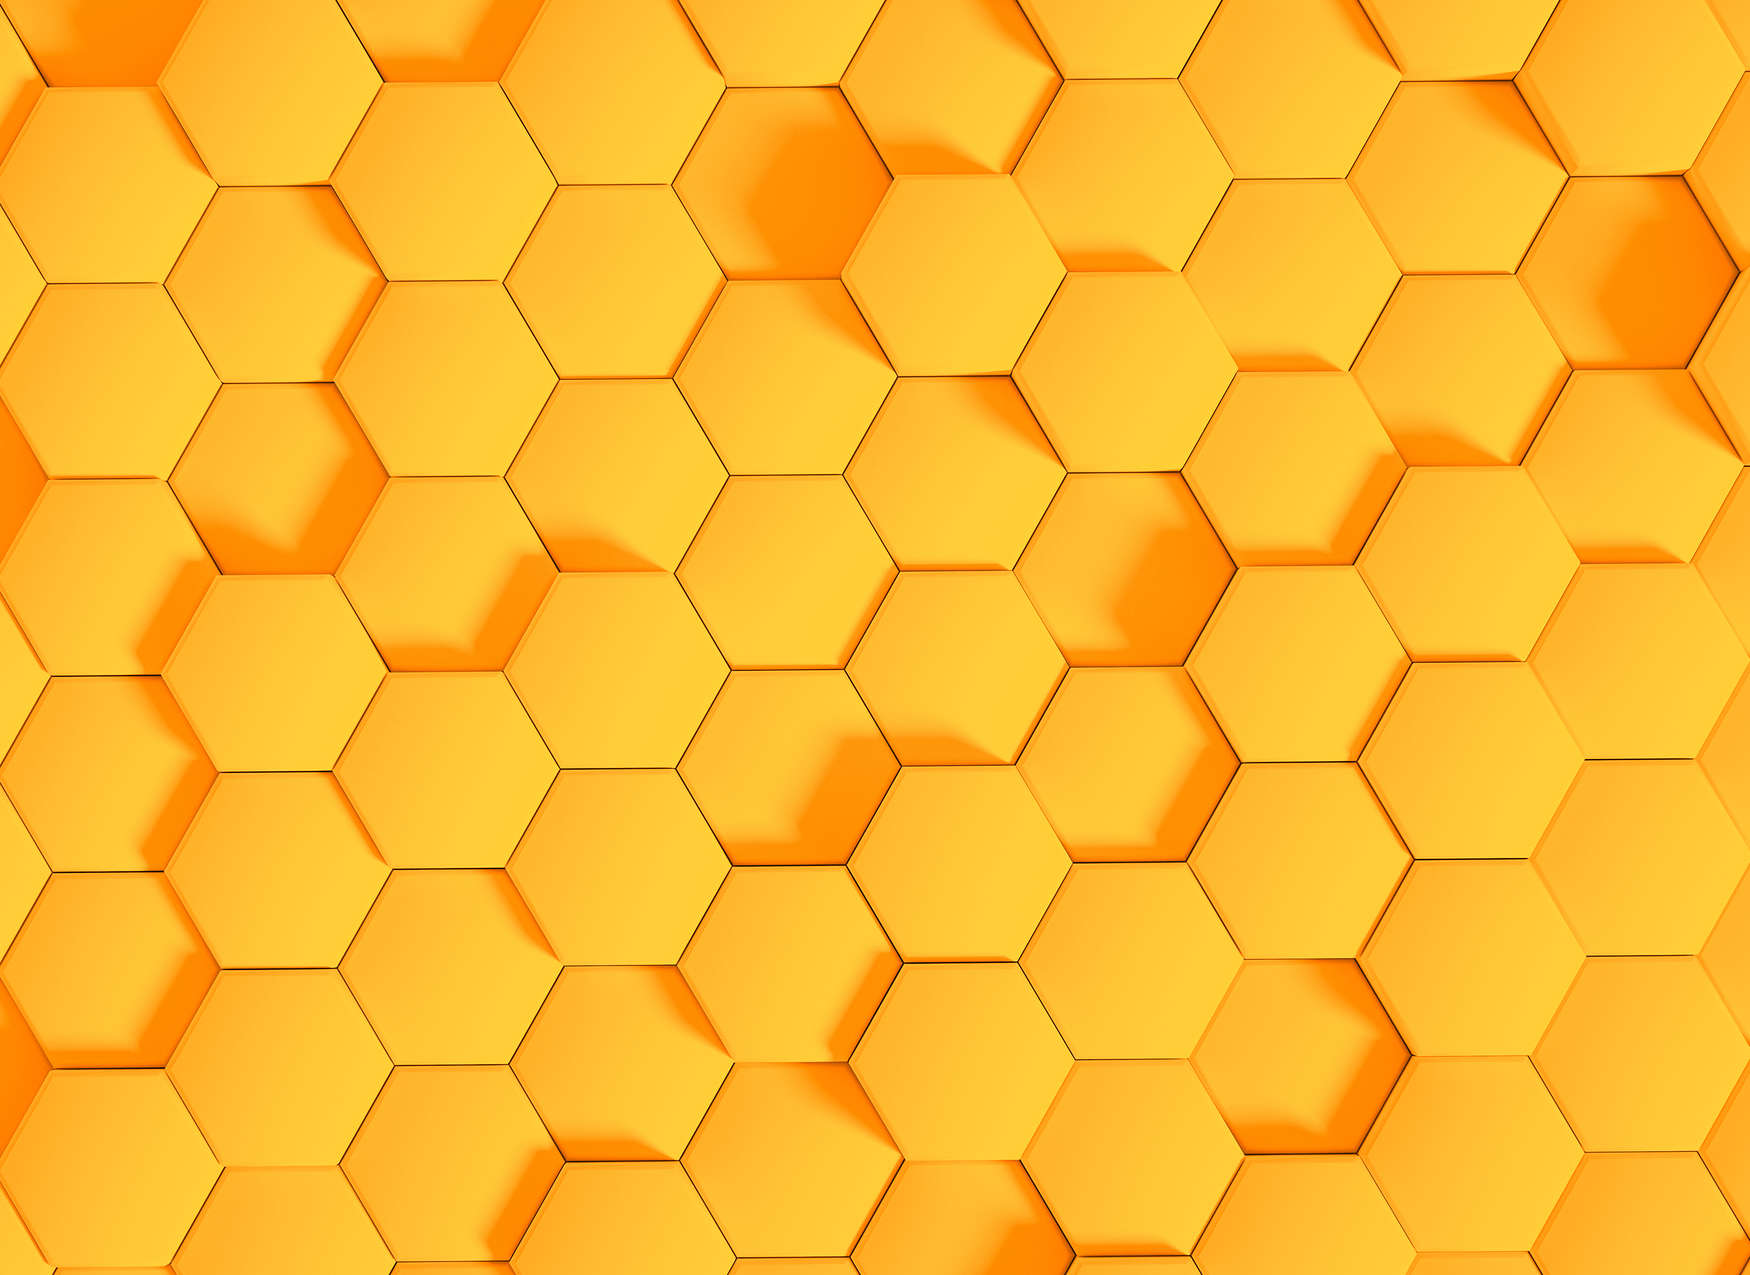             Honeycomb Pattern with 3D Optics Wallpaper - Orange
        